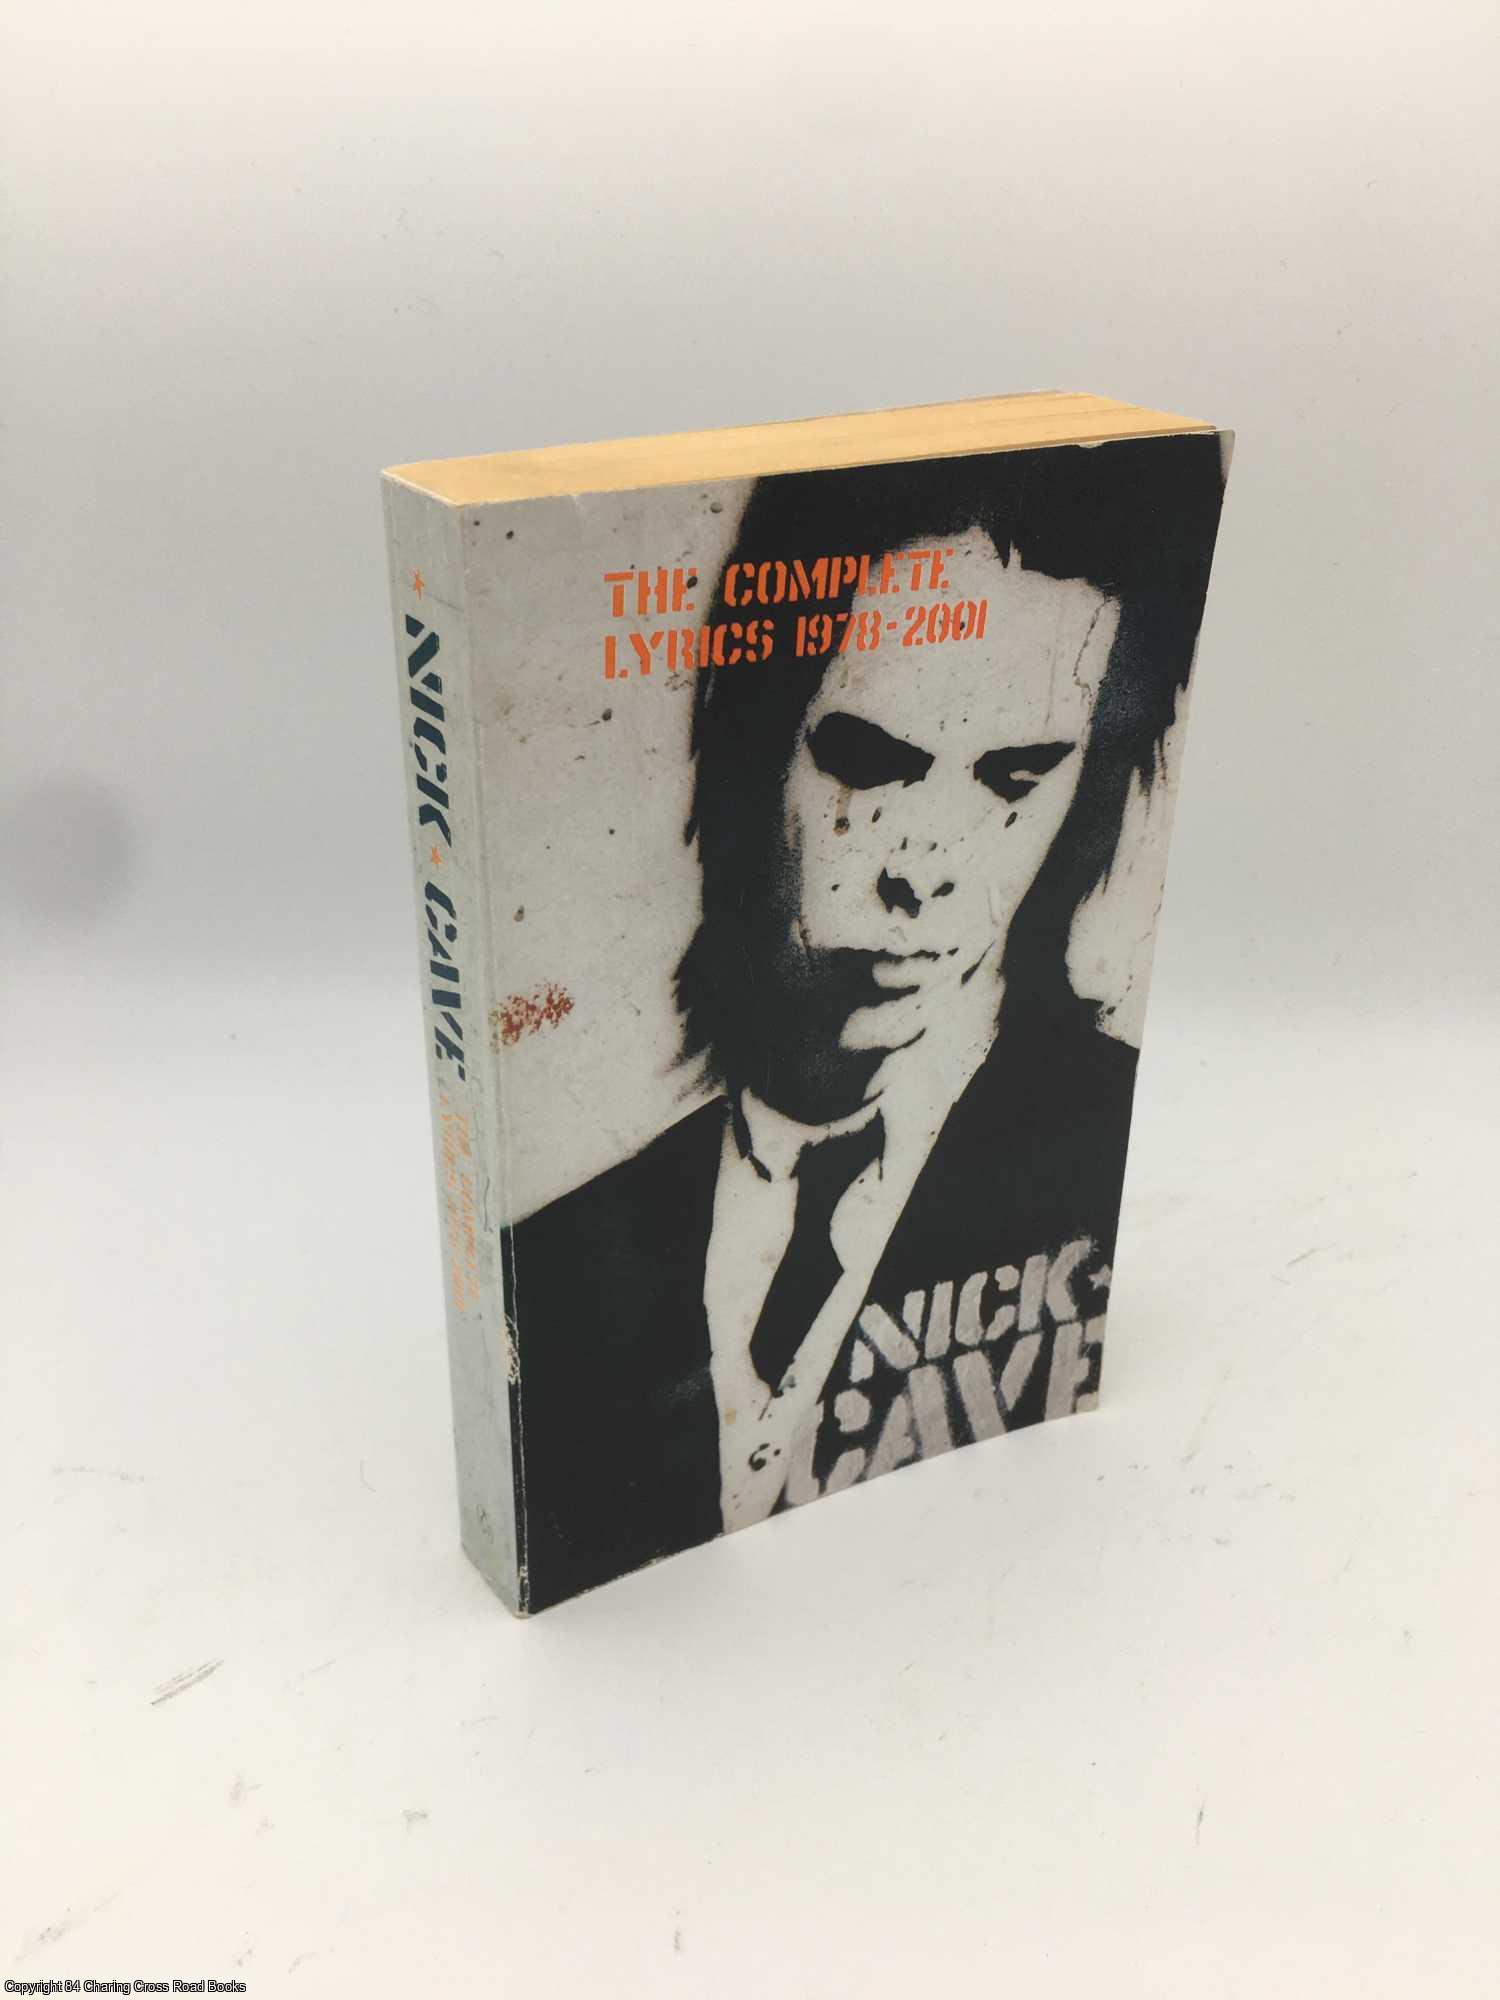 Cave, Nick - Complete Lyrics 1978-2001